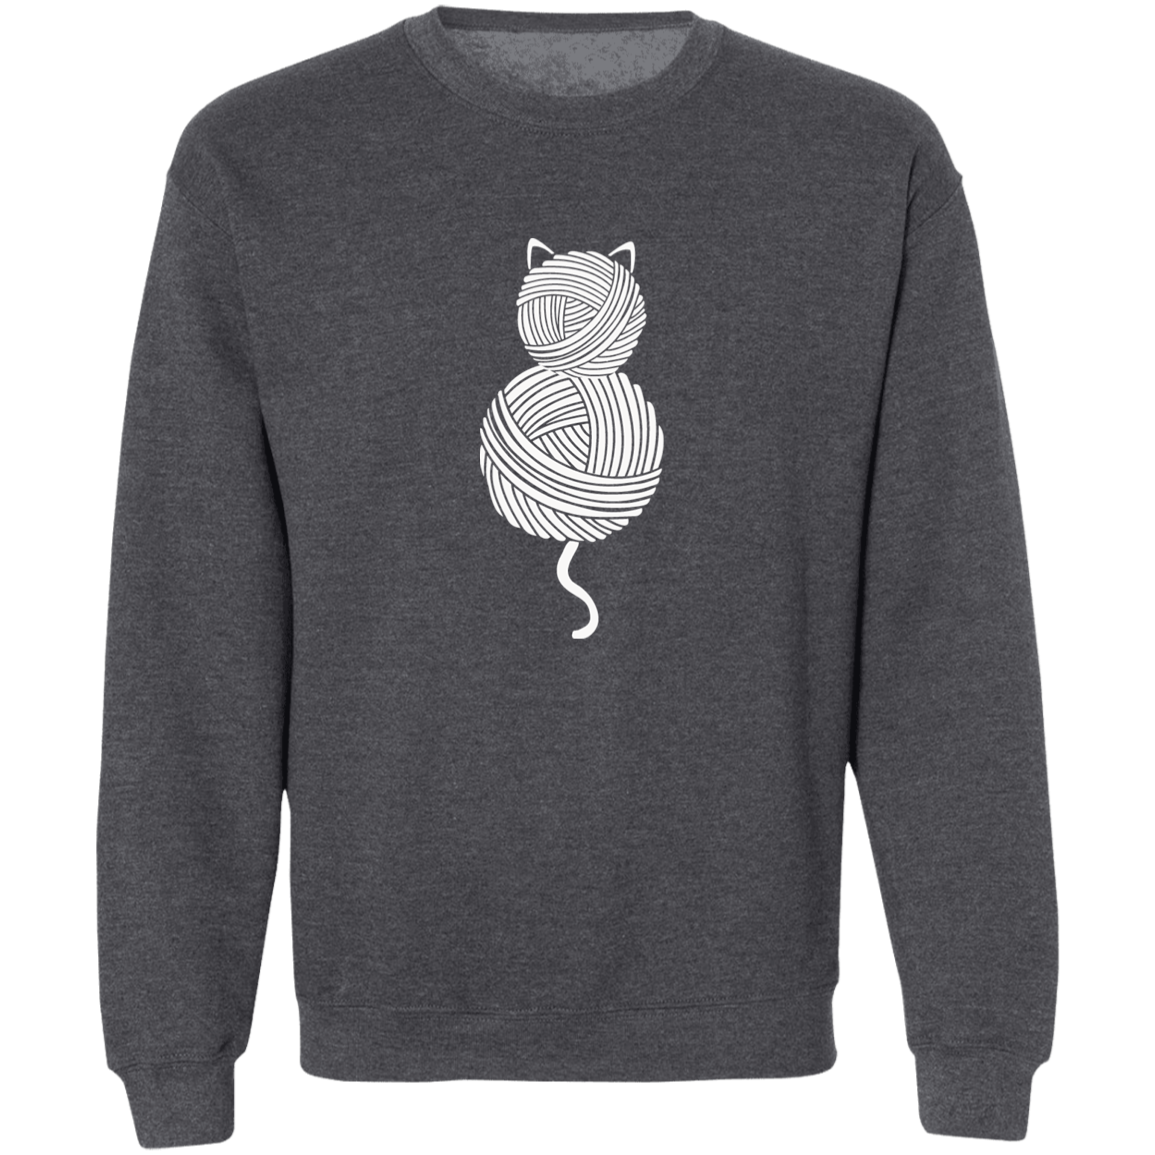 Yarn Kitty Crewneck Pullover Sweatshirt